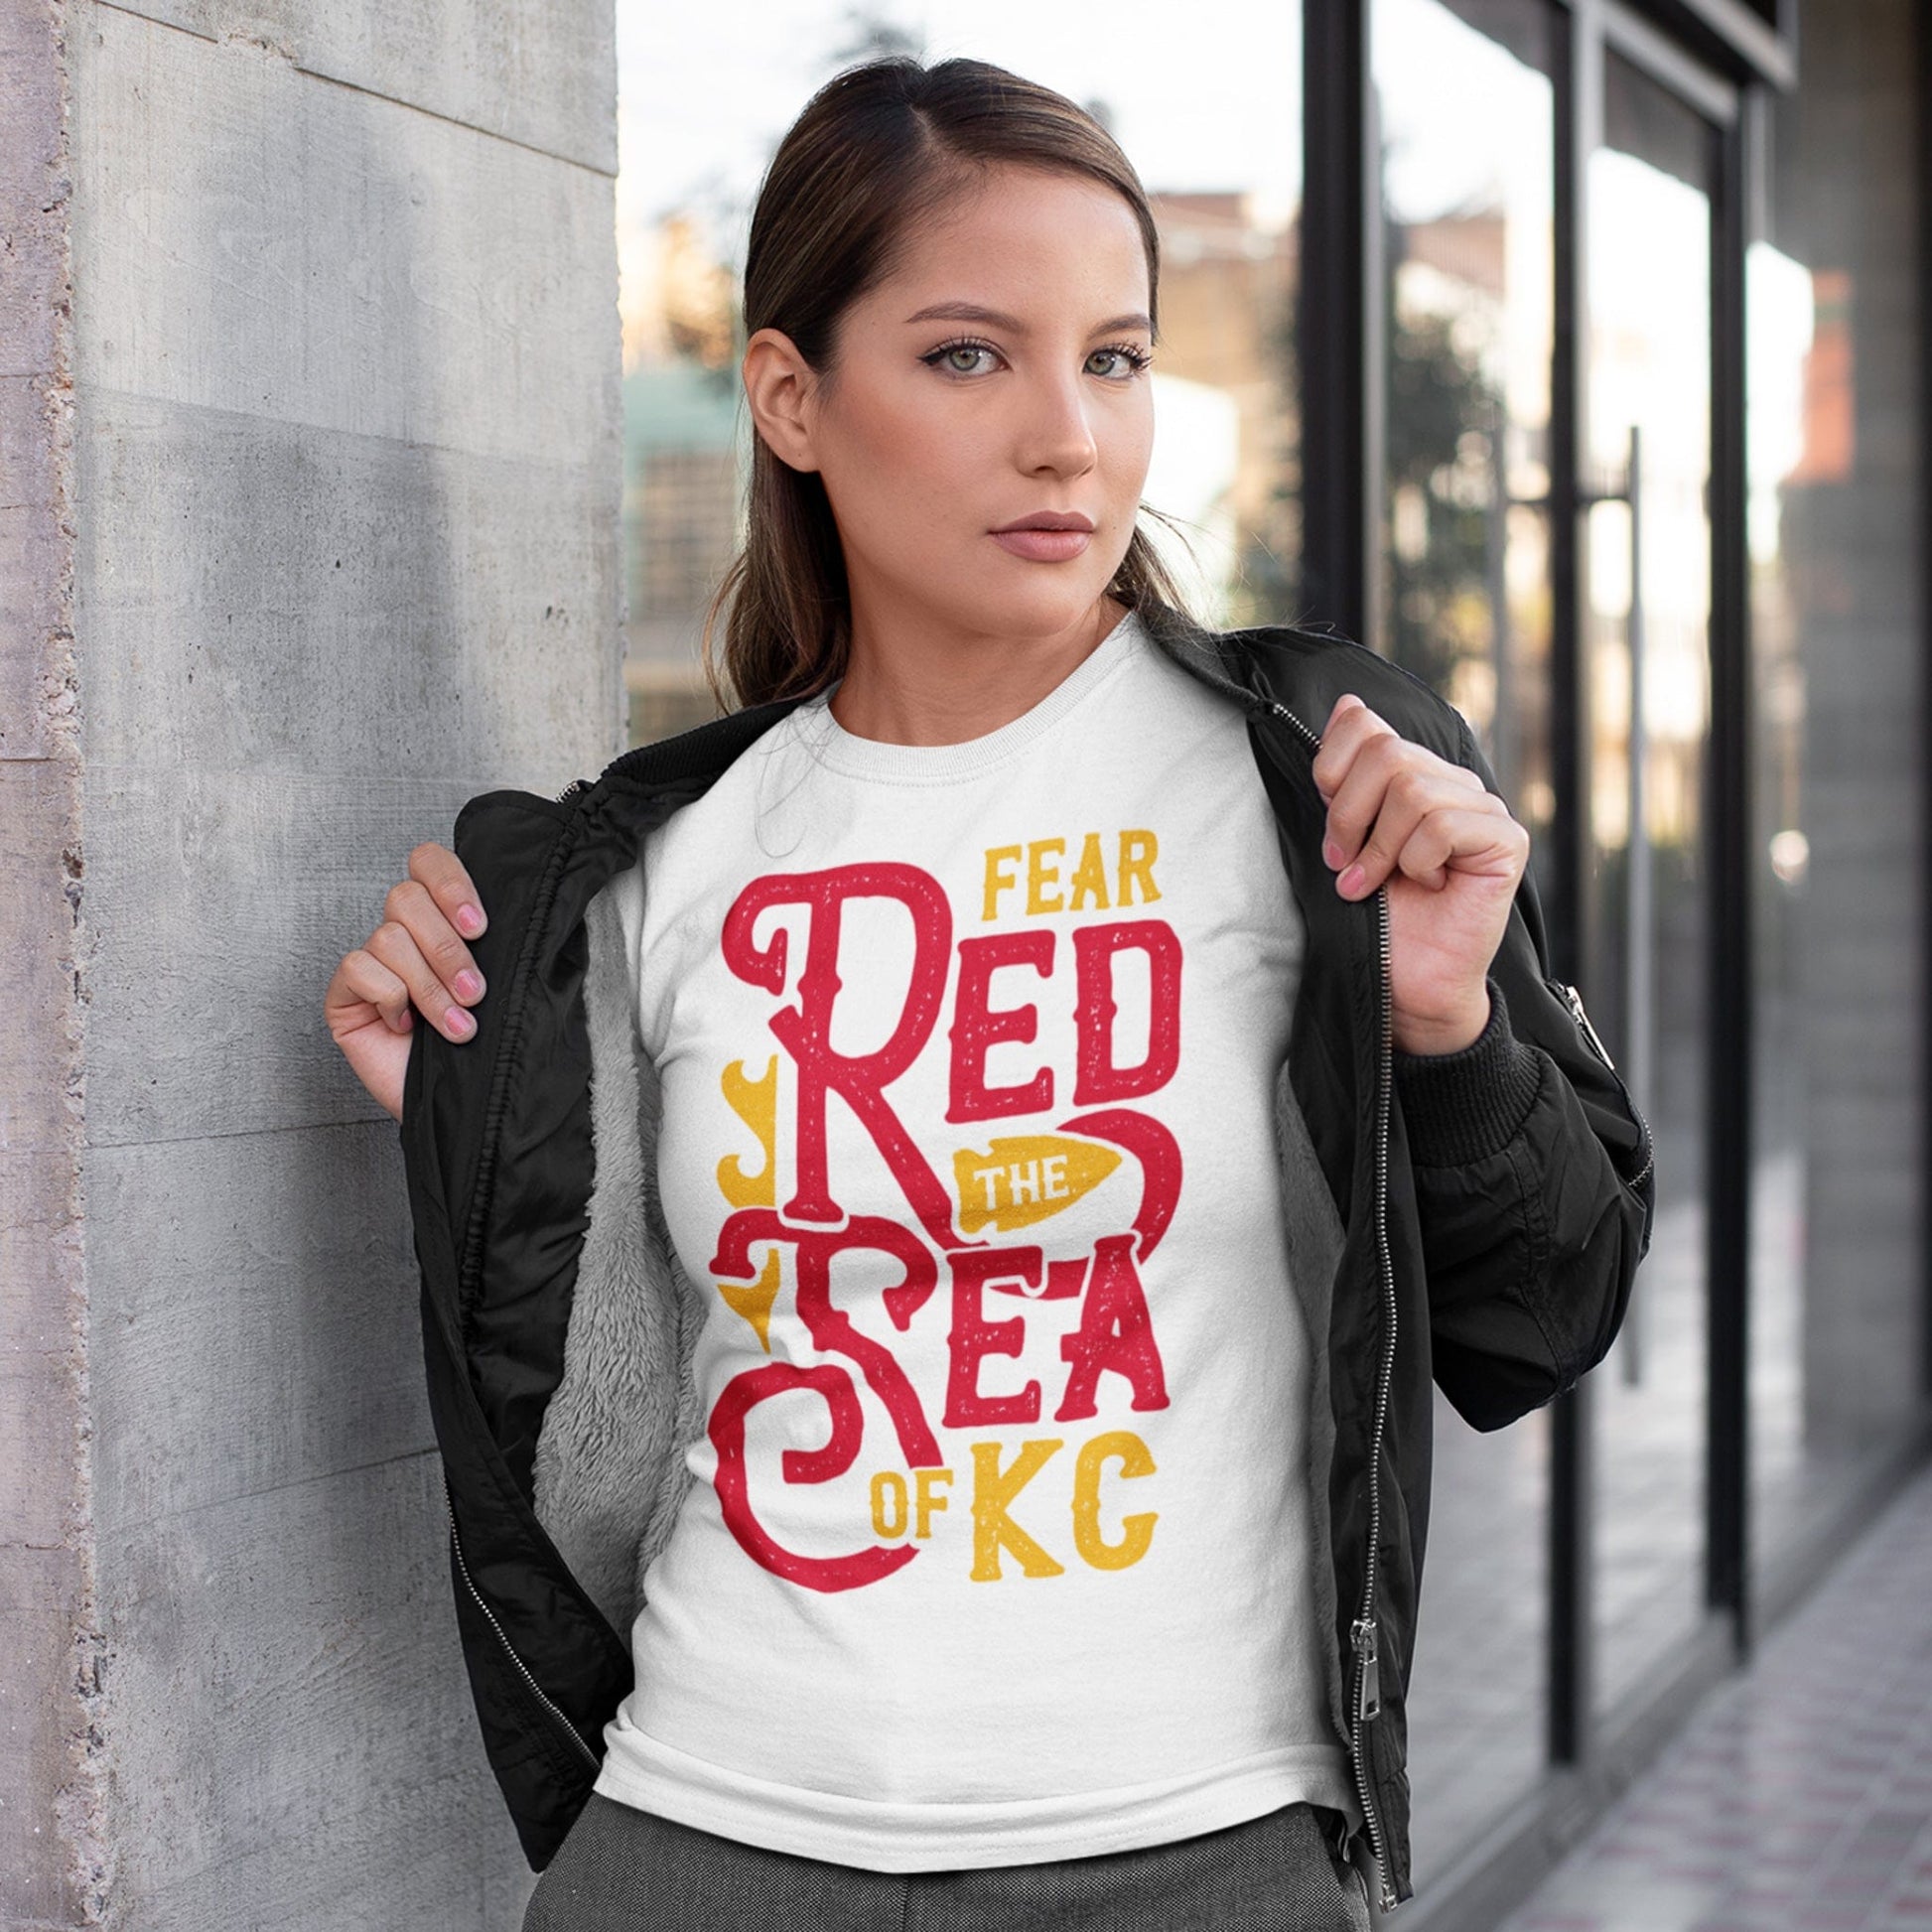 KC Swag Kansas City Chiefs SEA OF RED on white t-shirt worn by female model under a black jacket on an urban sidewalk